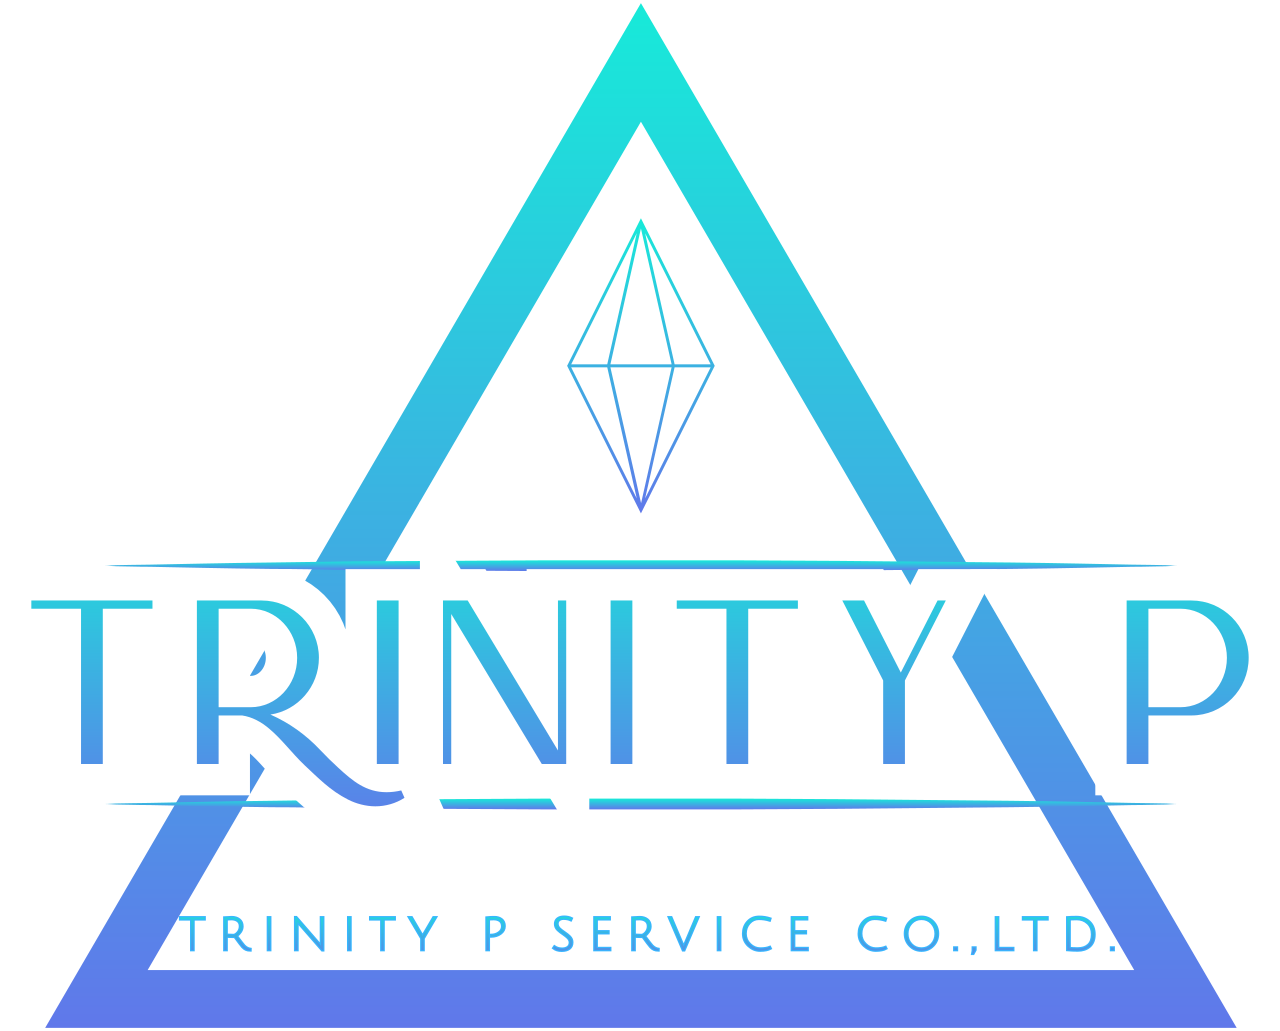 Trinity P's web page